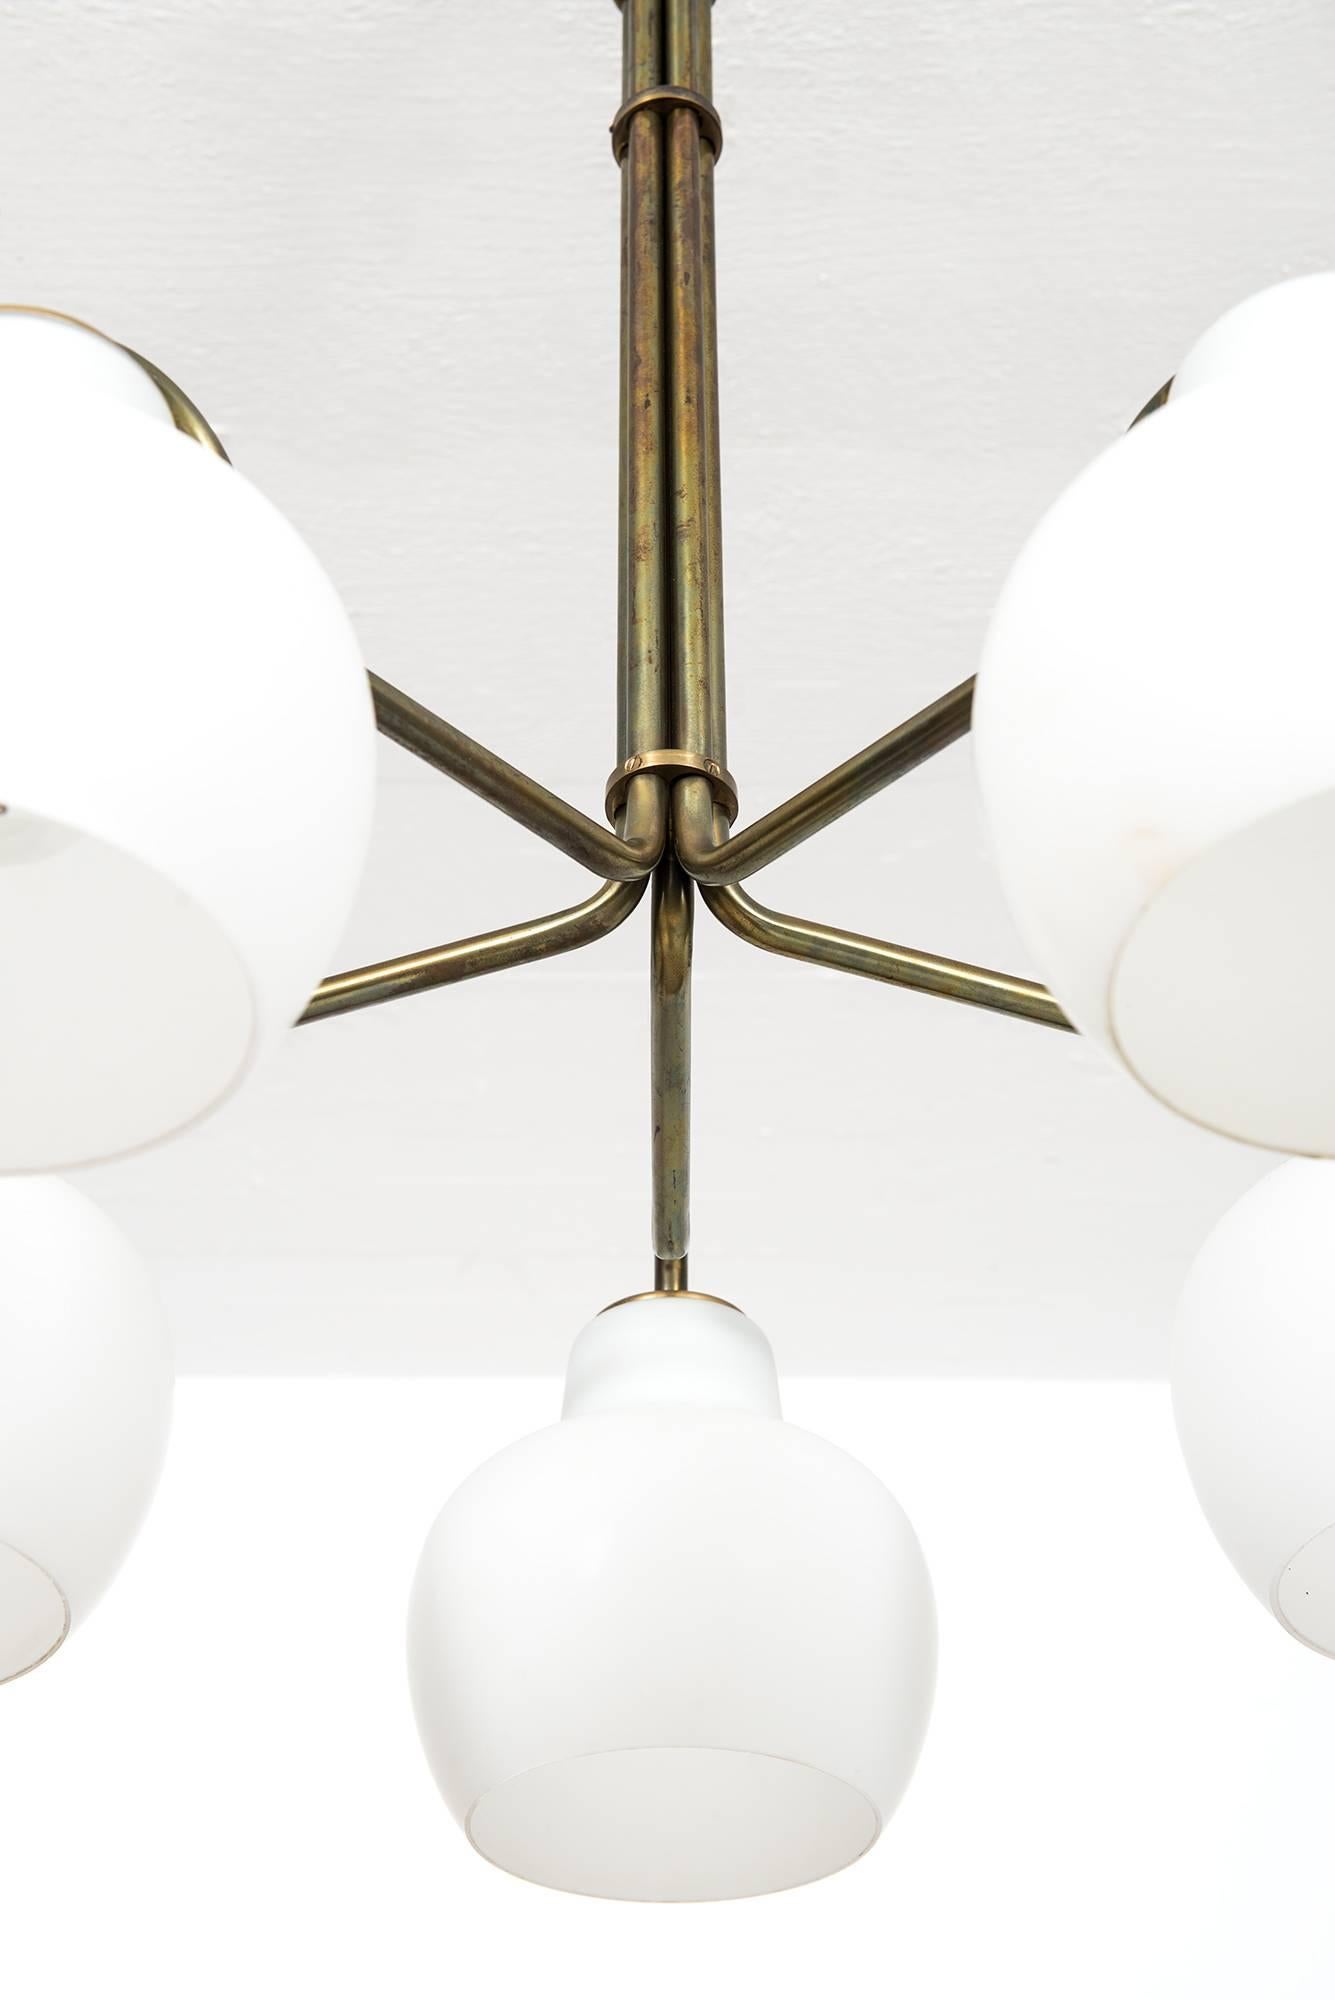 Rare ceiling lamp designed by Vilhelm Lauritzen. Produced by Louis Poulsen in Denmark.